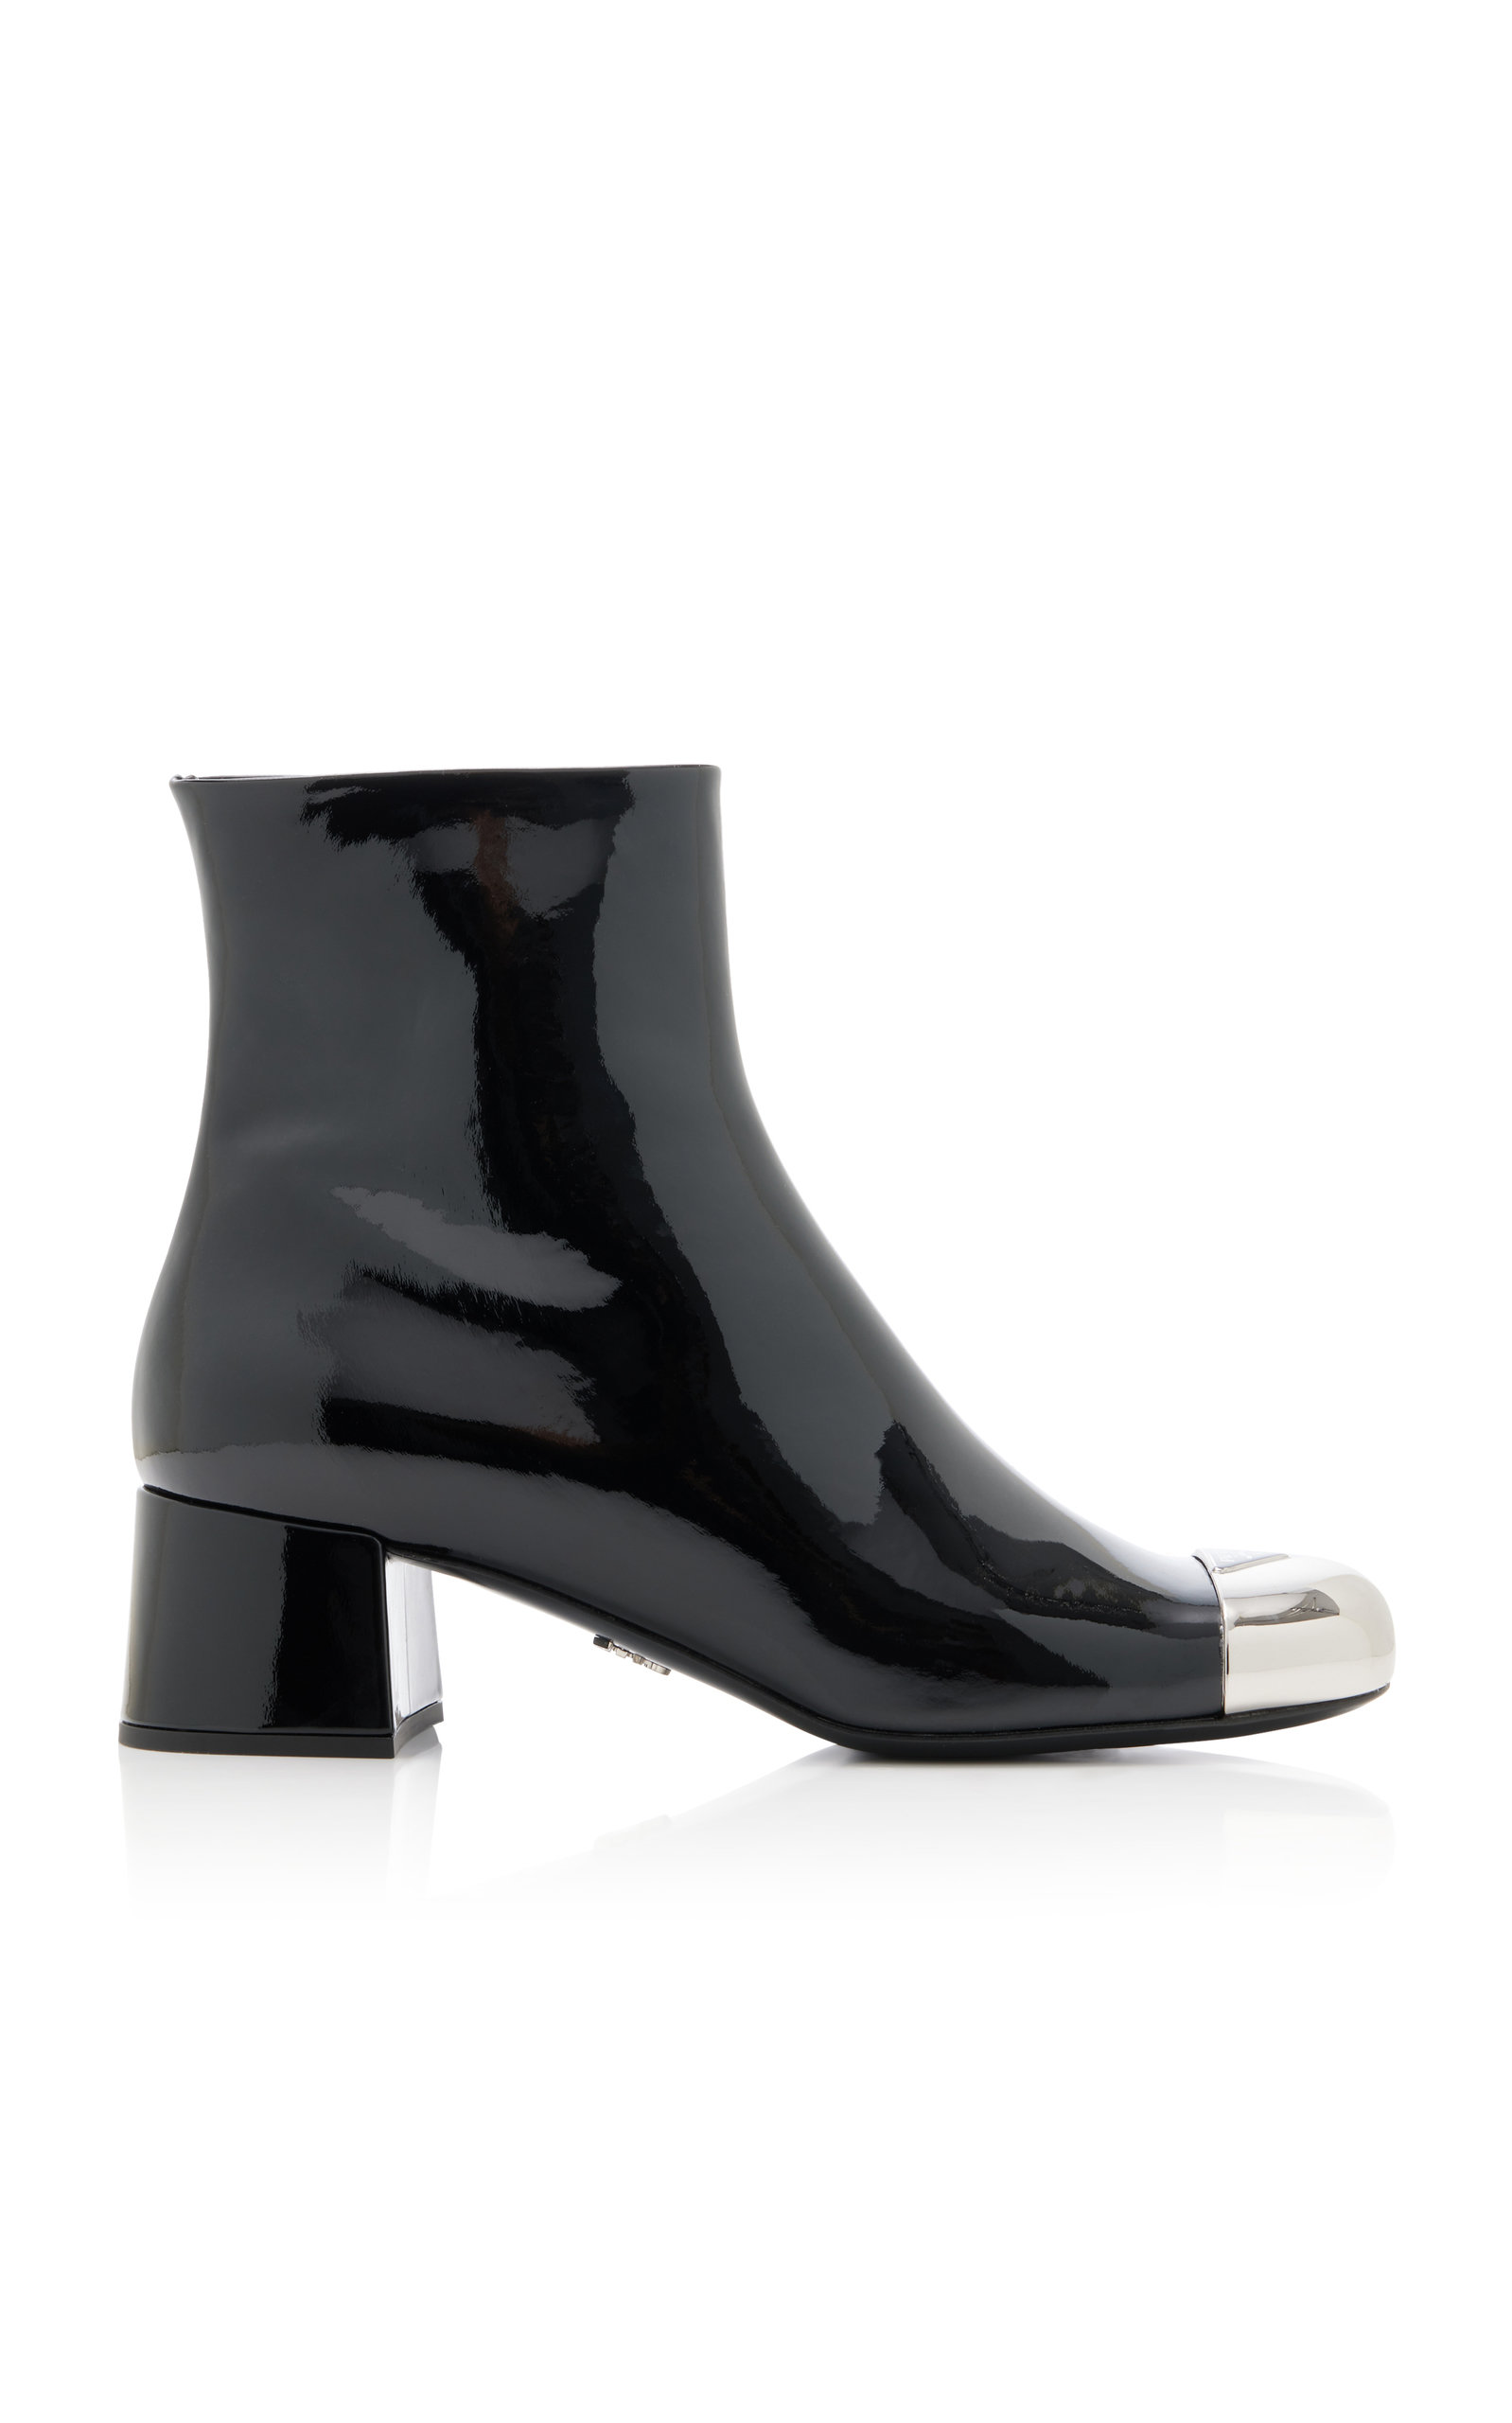 Prada - Women's Modellerie Metal-Tipped Leather Ankle Boots - Black - IT 35.5 - Moda Operandi